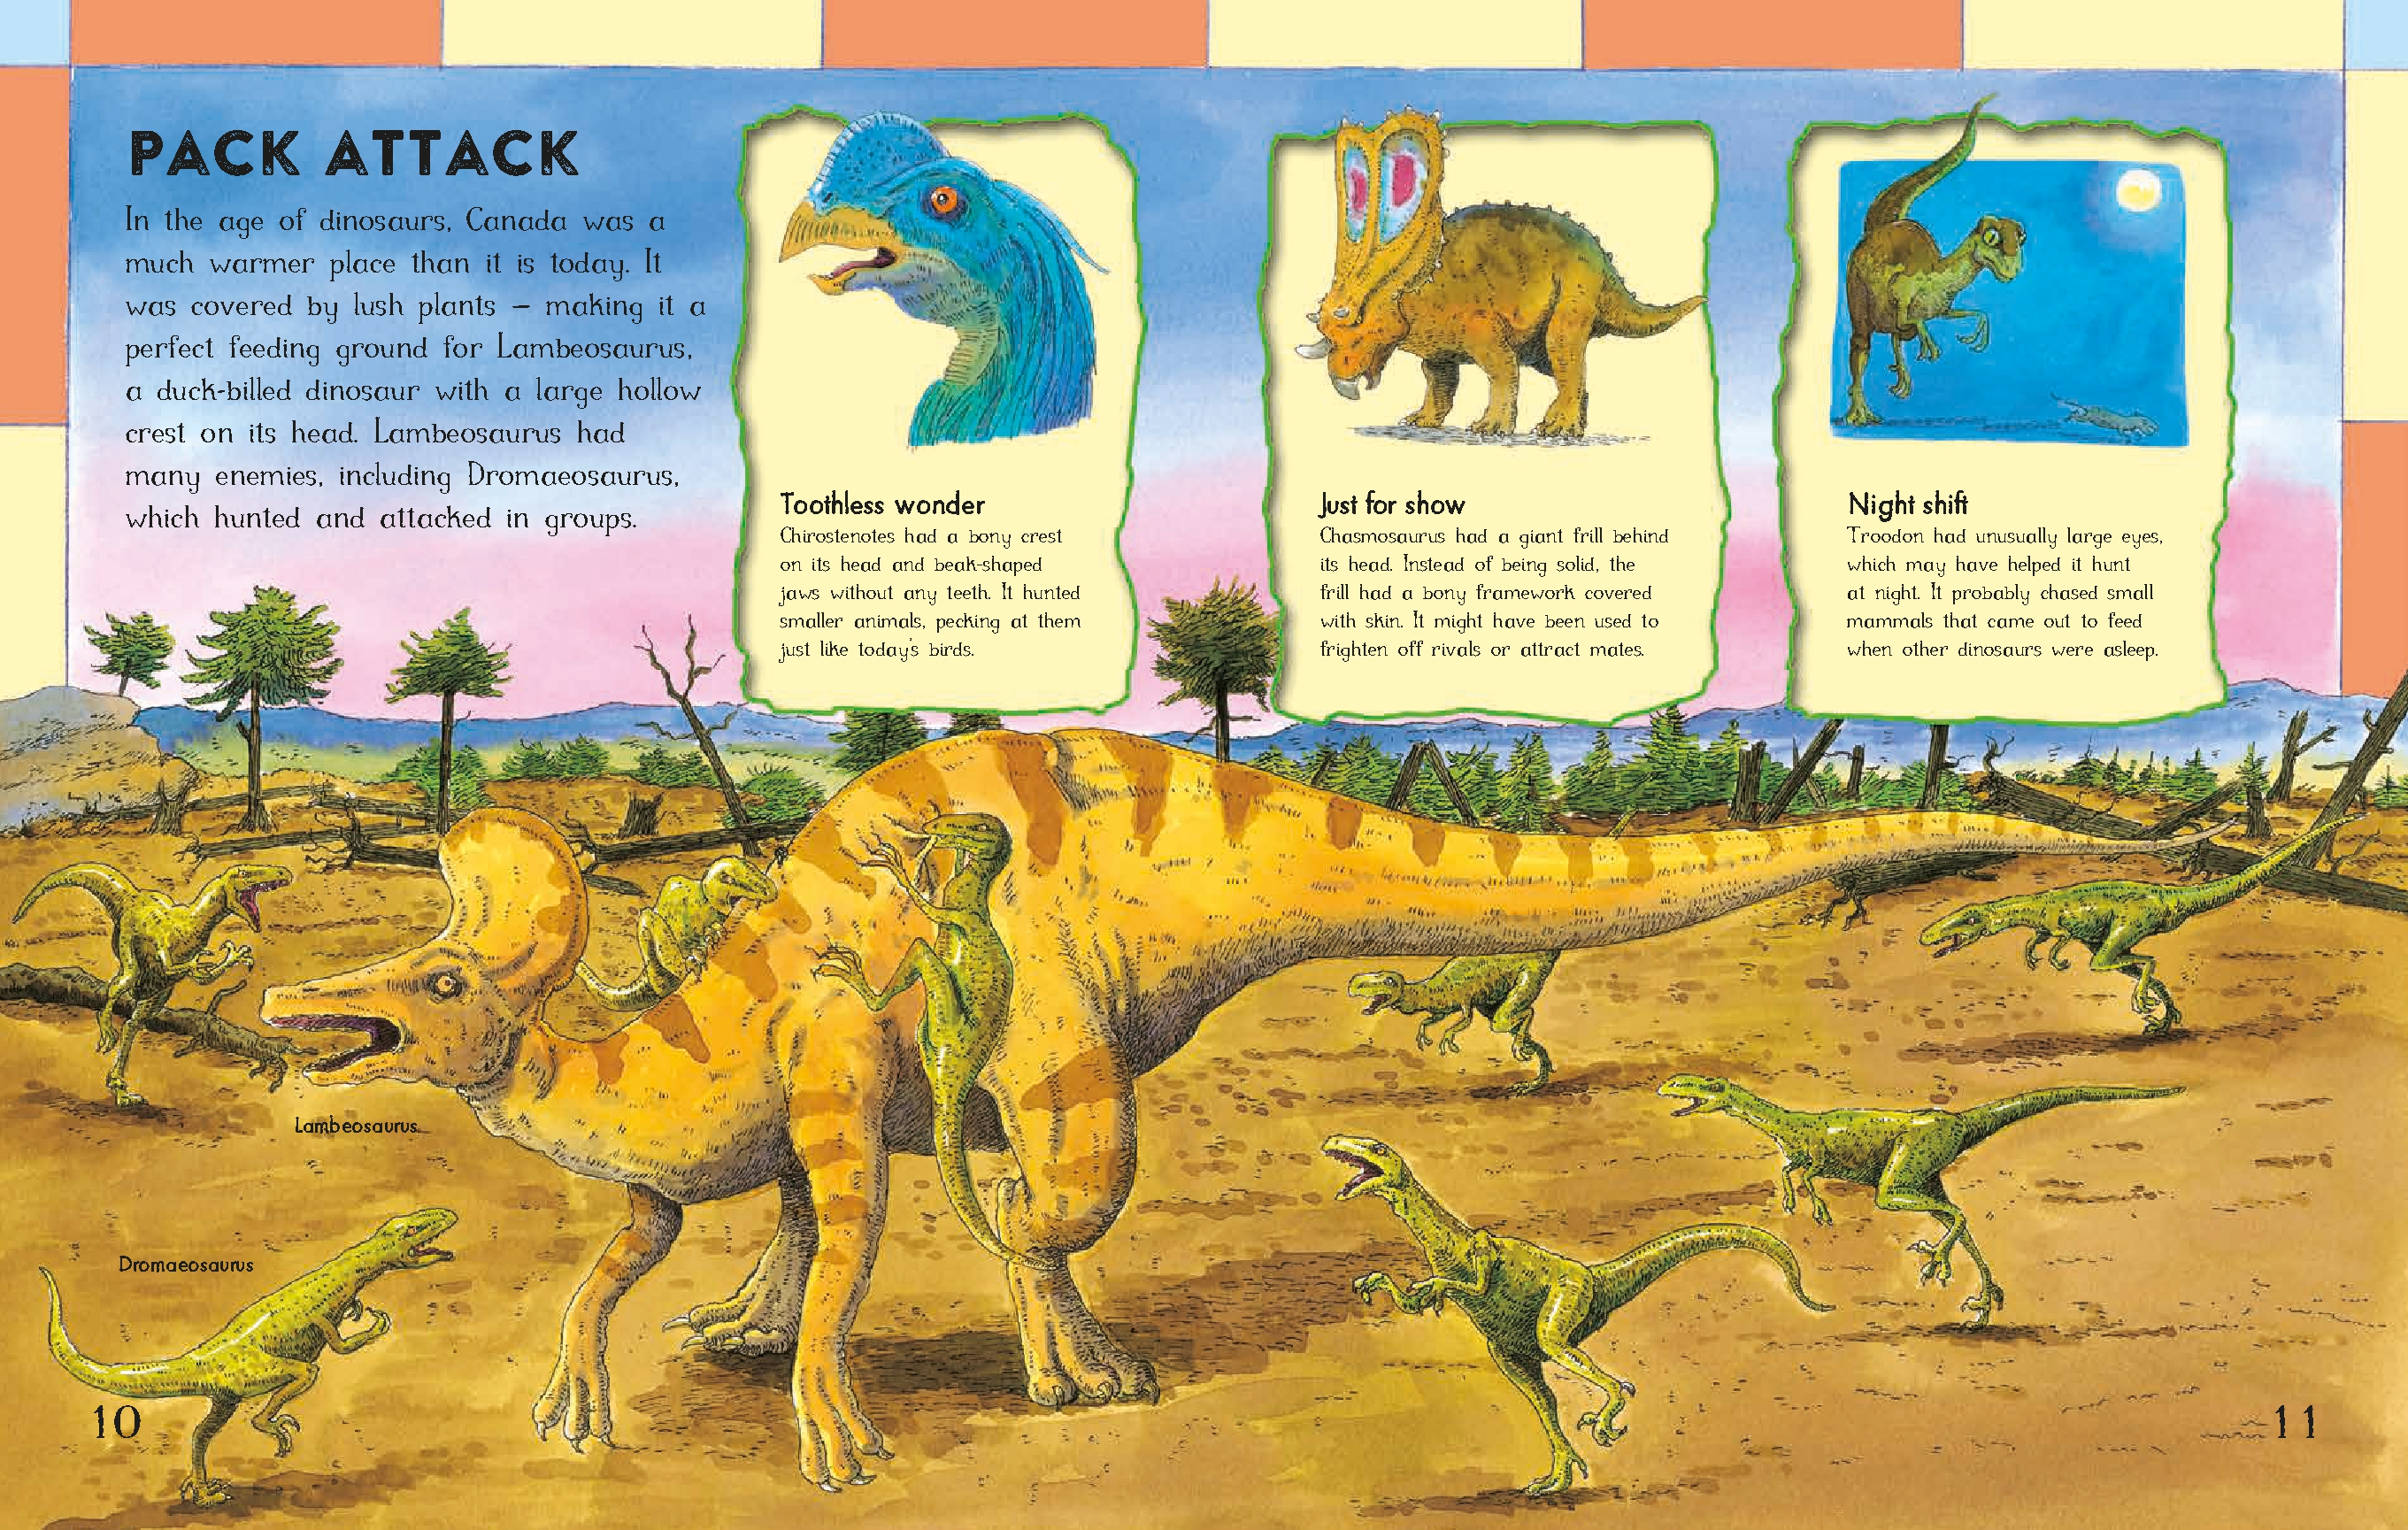 First Dinosaur Picture Atlas